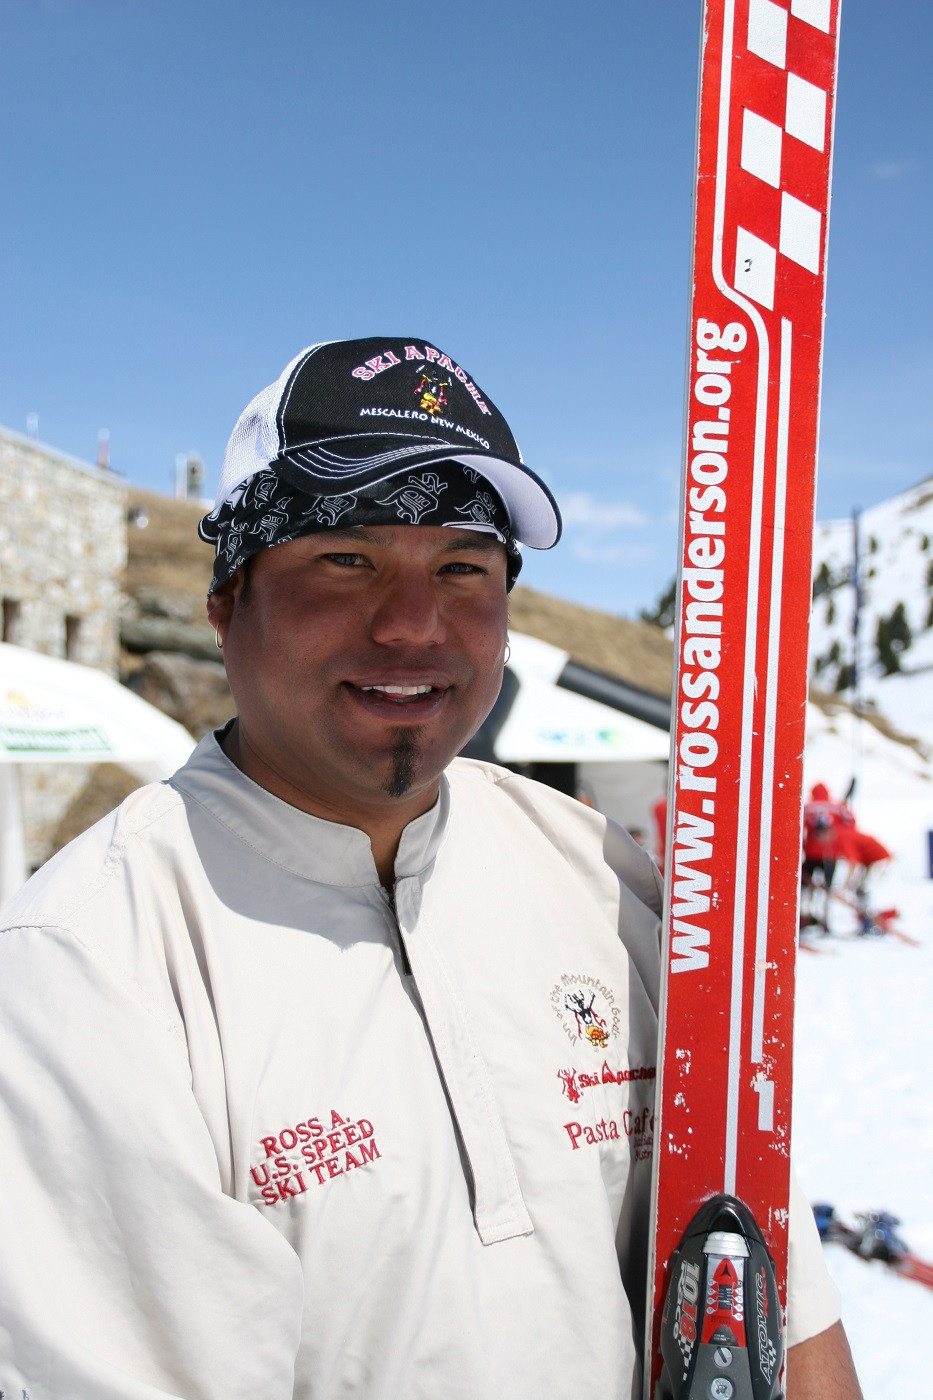 Ross Anderson skier